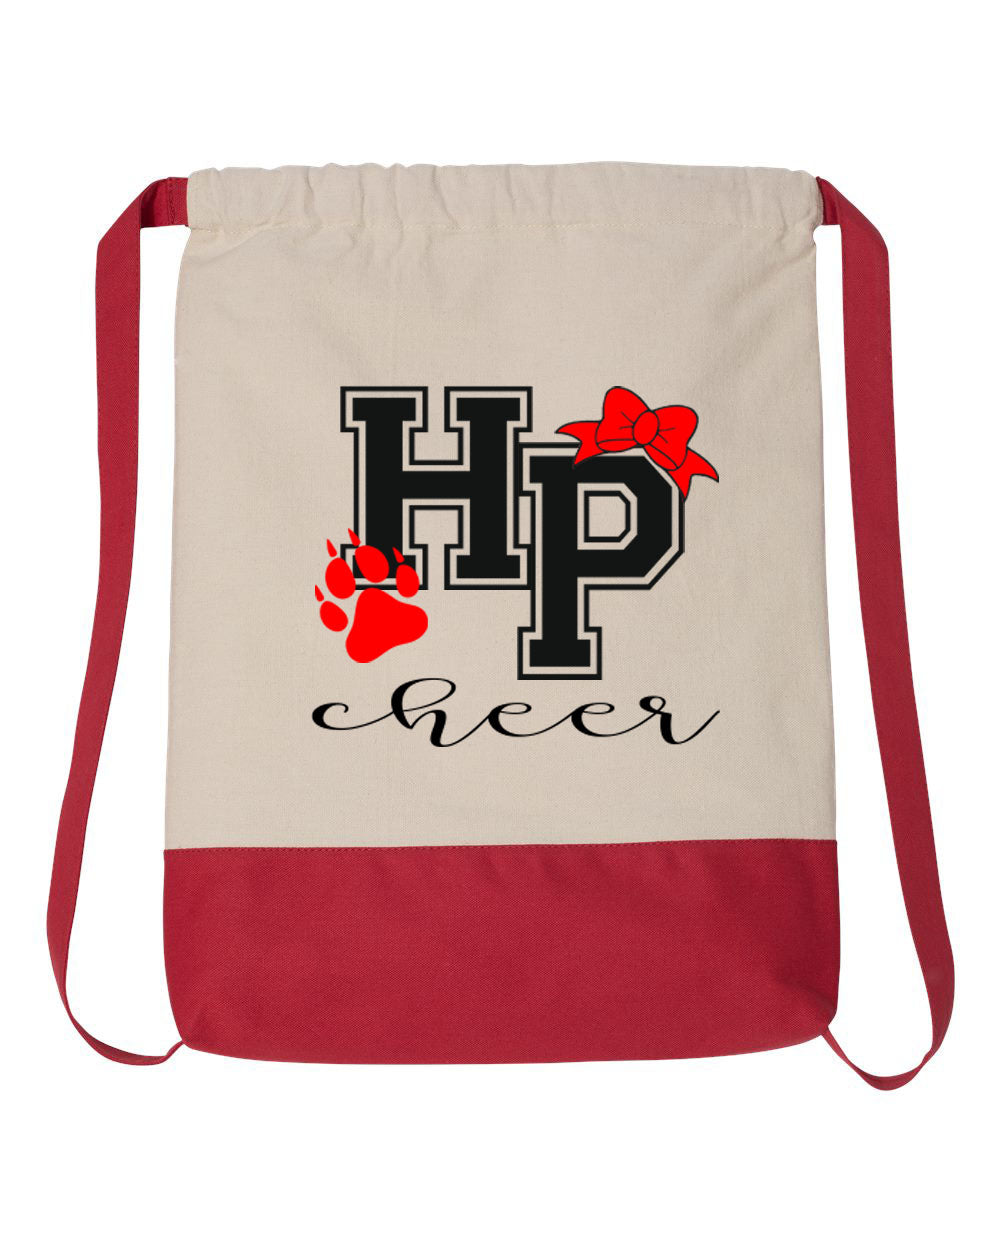 High Point Cheer Design 3 Drawstring Bag